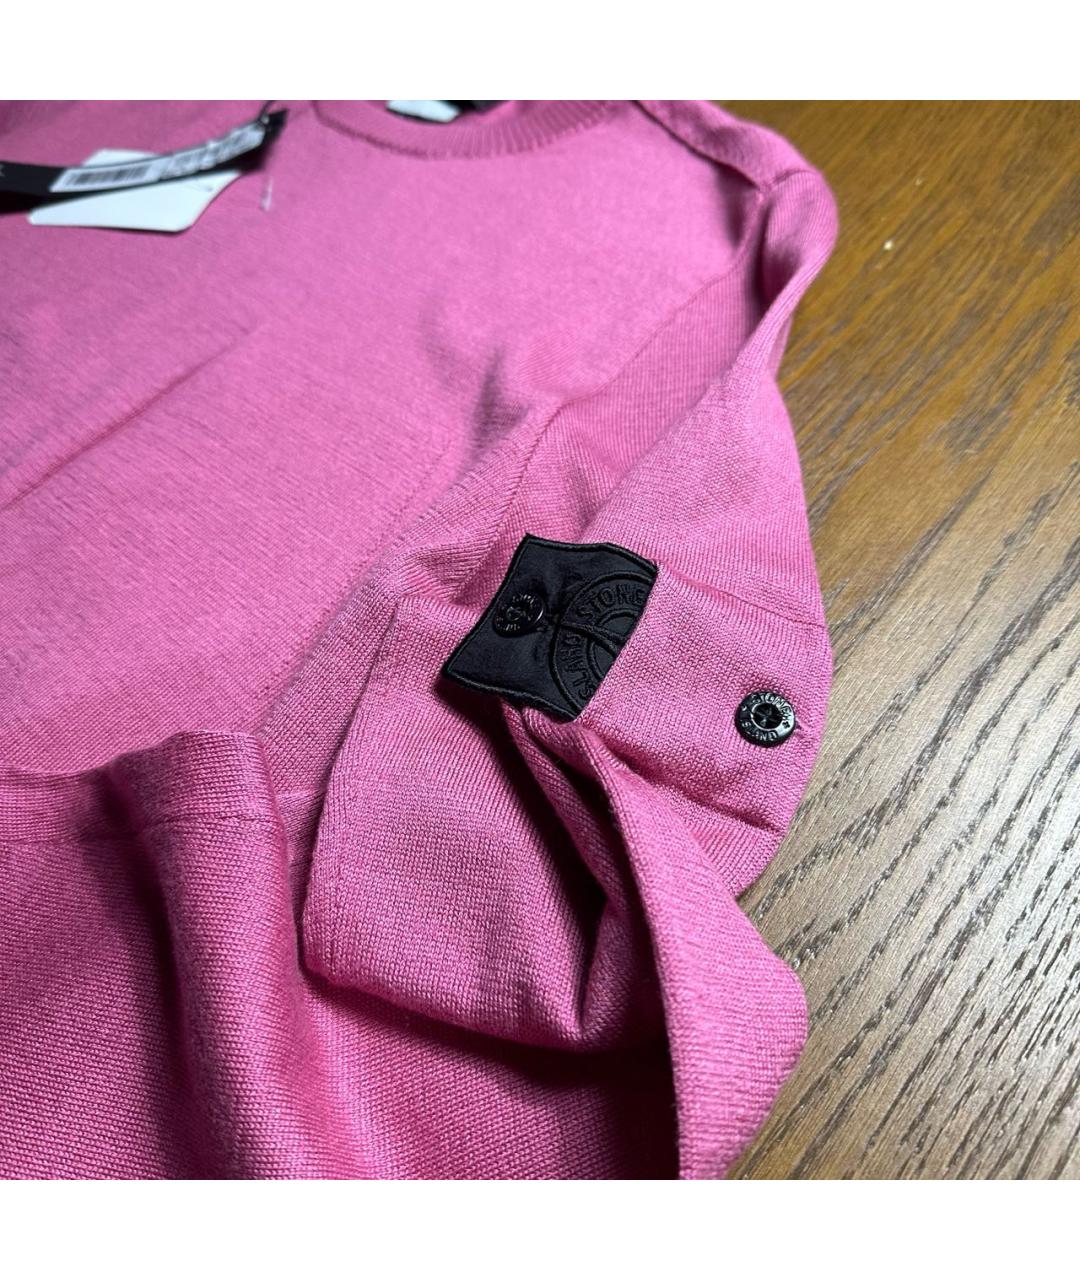 STONE ISLAND SHADOW PROJECT Розовый хлопковый джемпер / свитер, фото 4